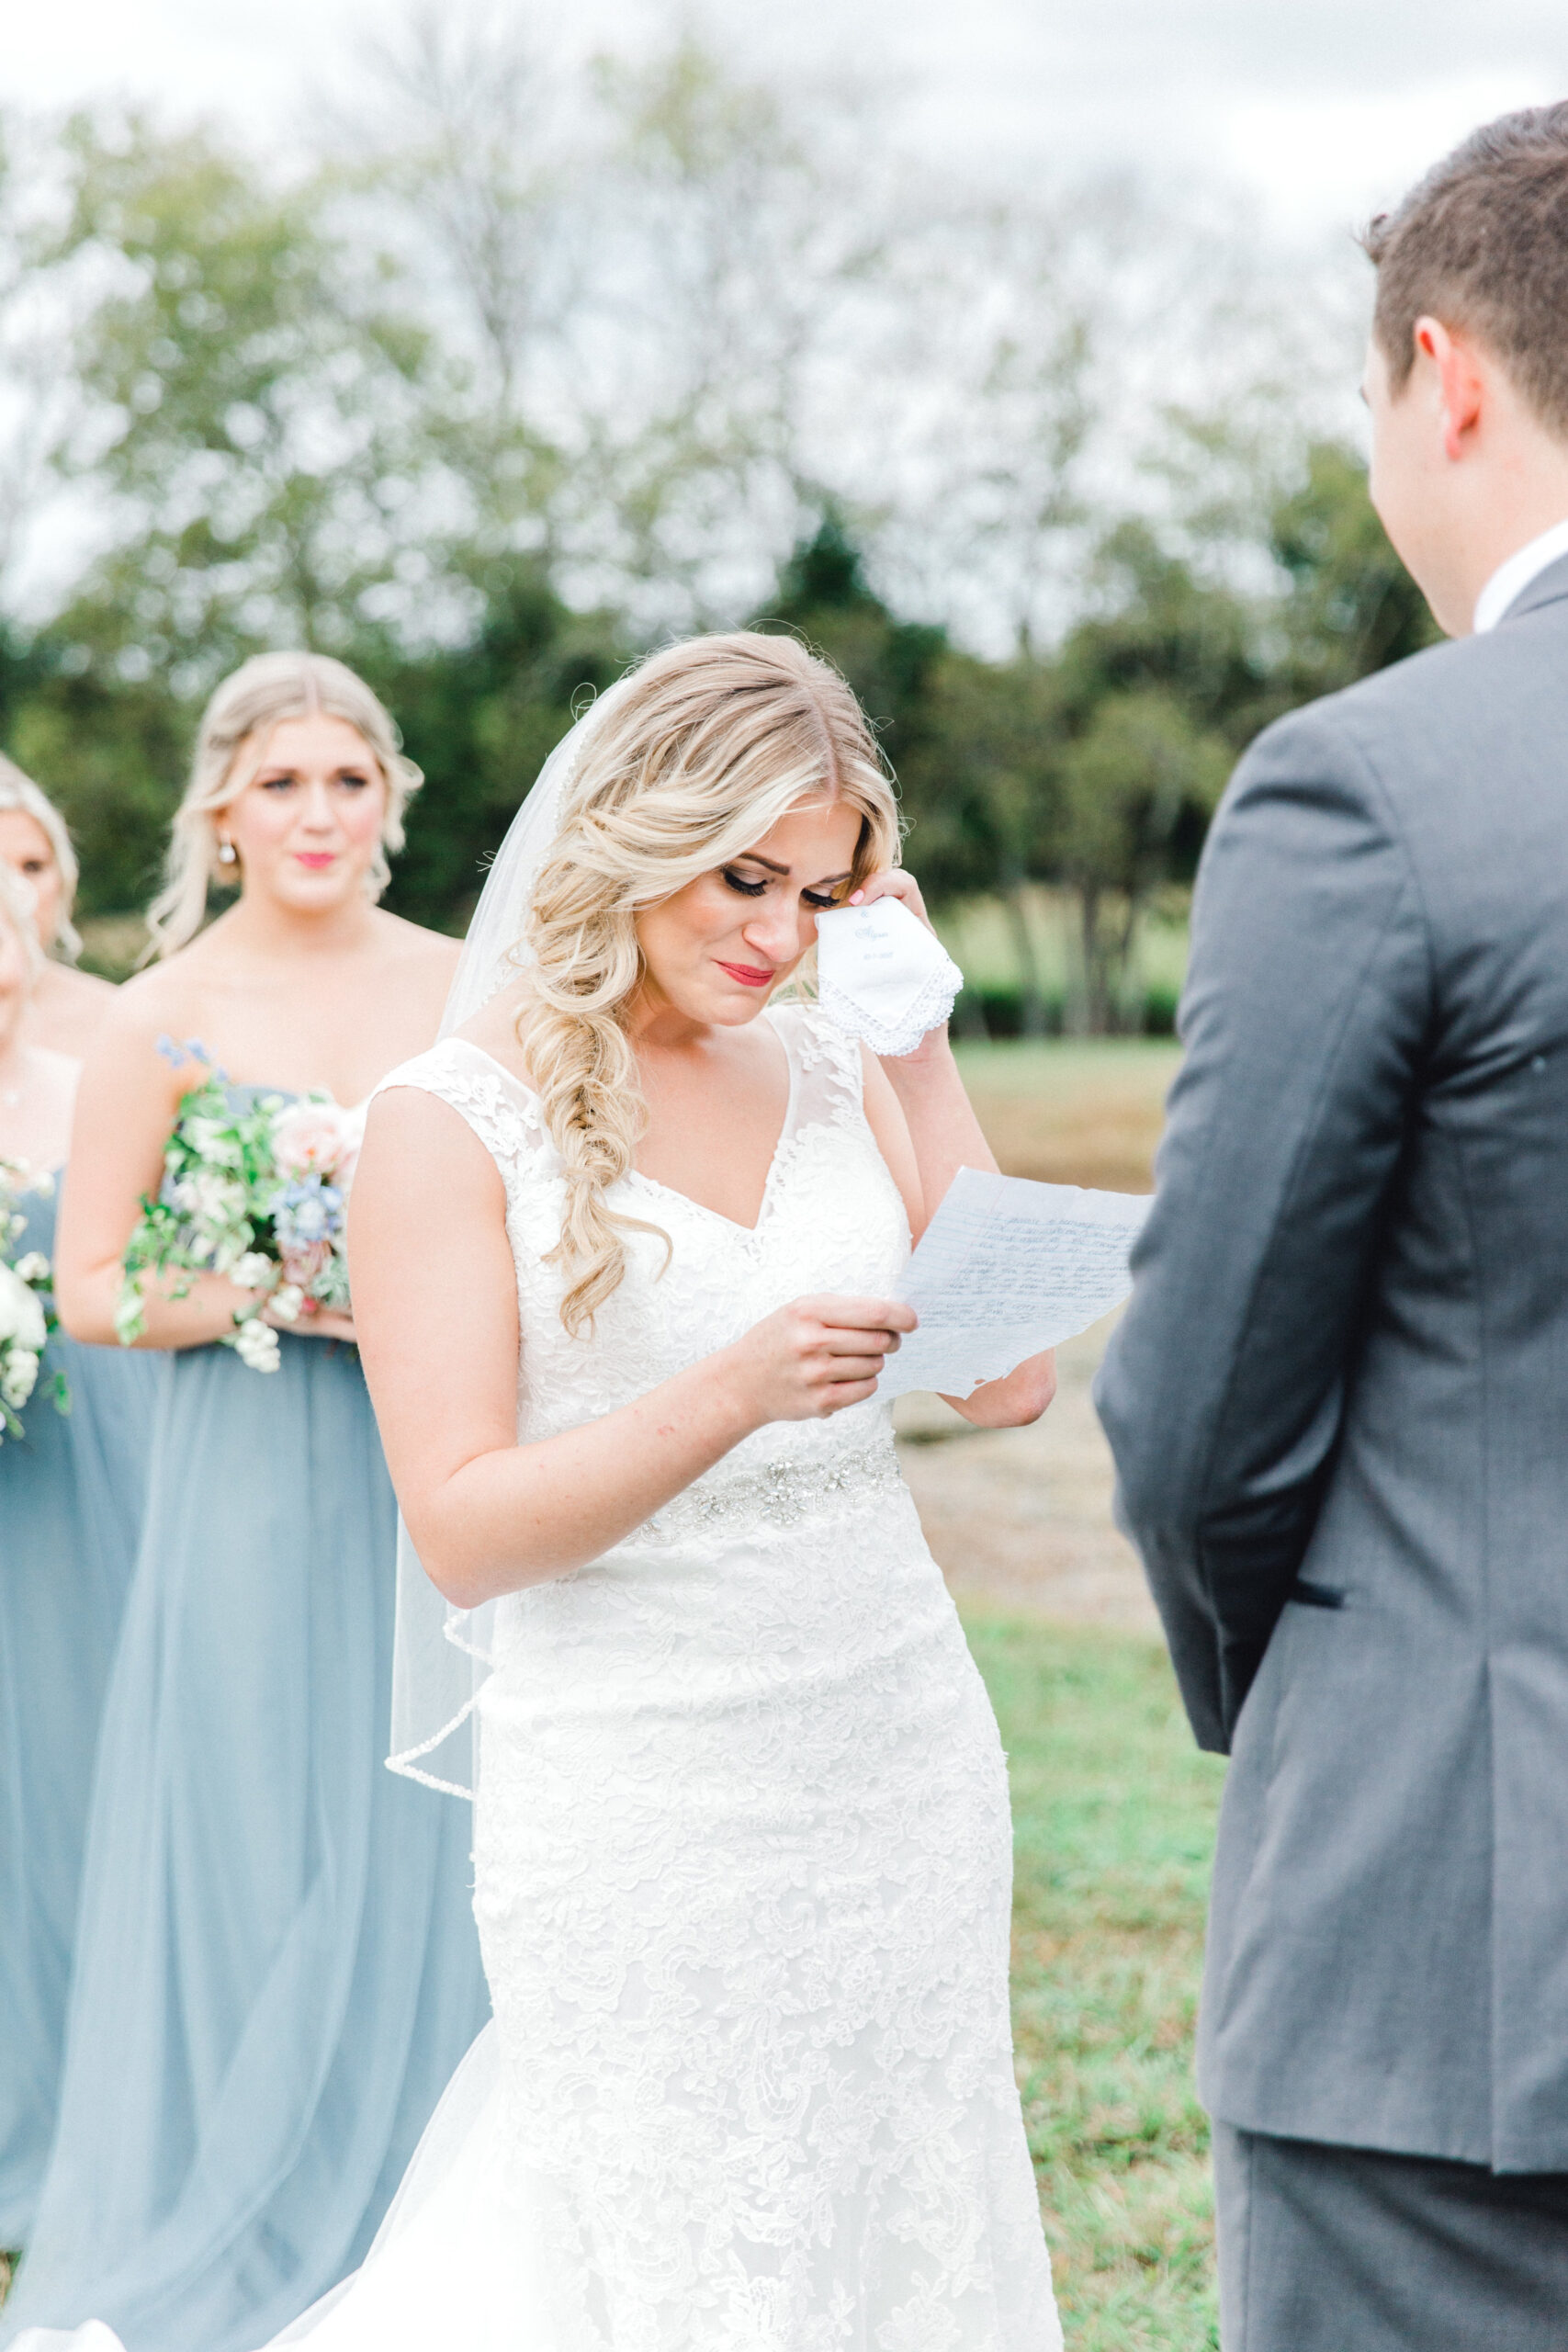 Paige-Mercer-Photography-Florida-Wedding-Photographer-Alyssa&Drew-51.jpg